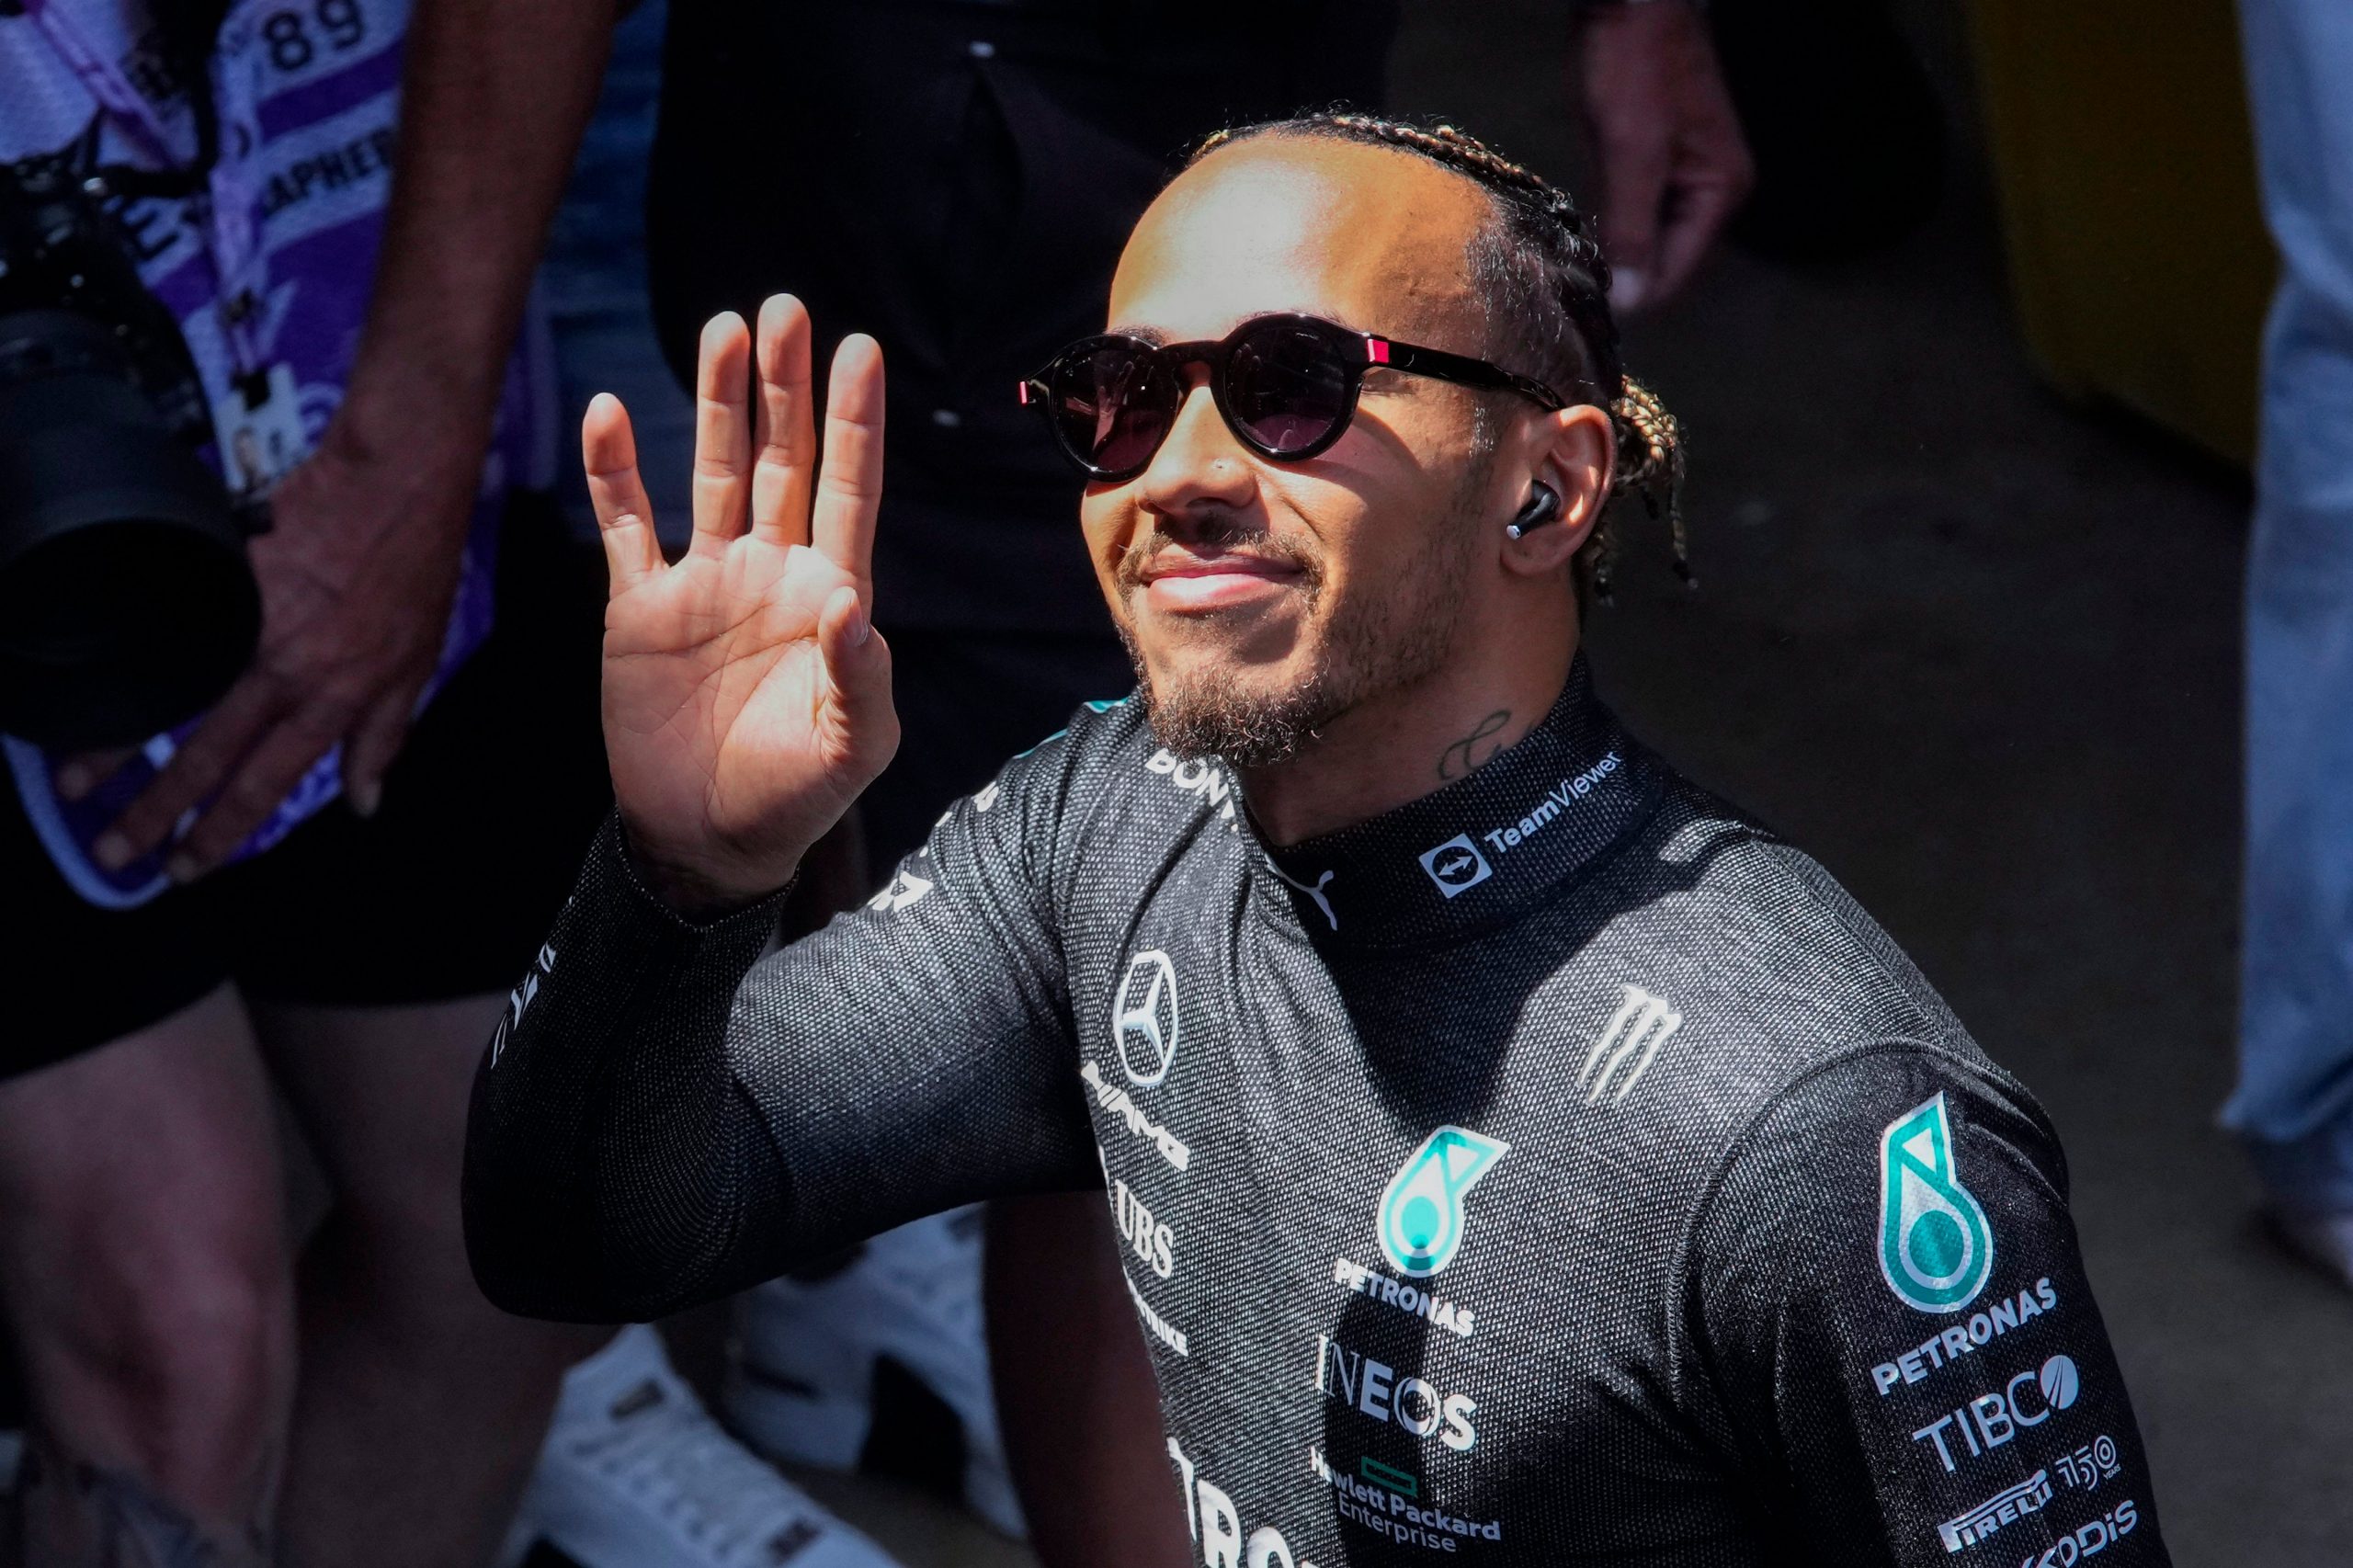 F1: Hamilton dismisses jewellery debate at Monaco, has ‘better fish to fry’